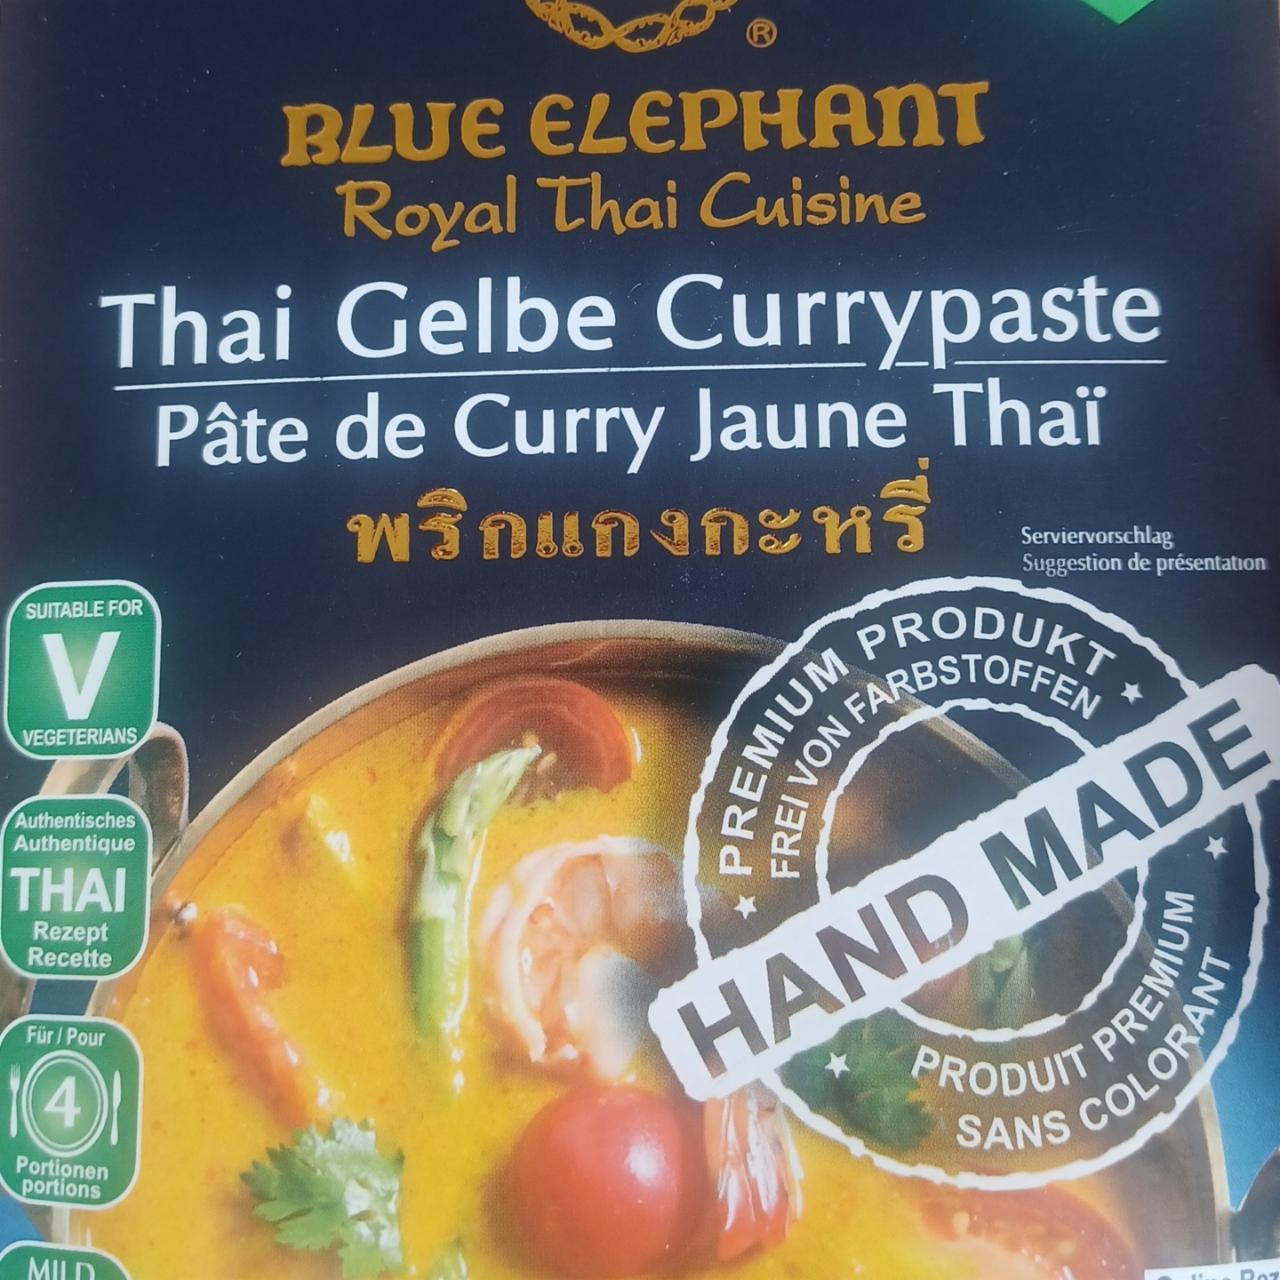 Fotografie - Thai Gelbe Currypaste Blue elephant